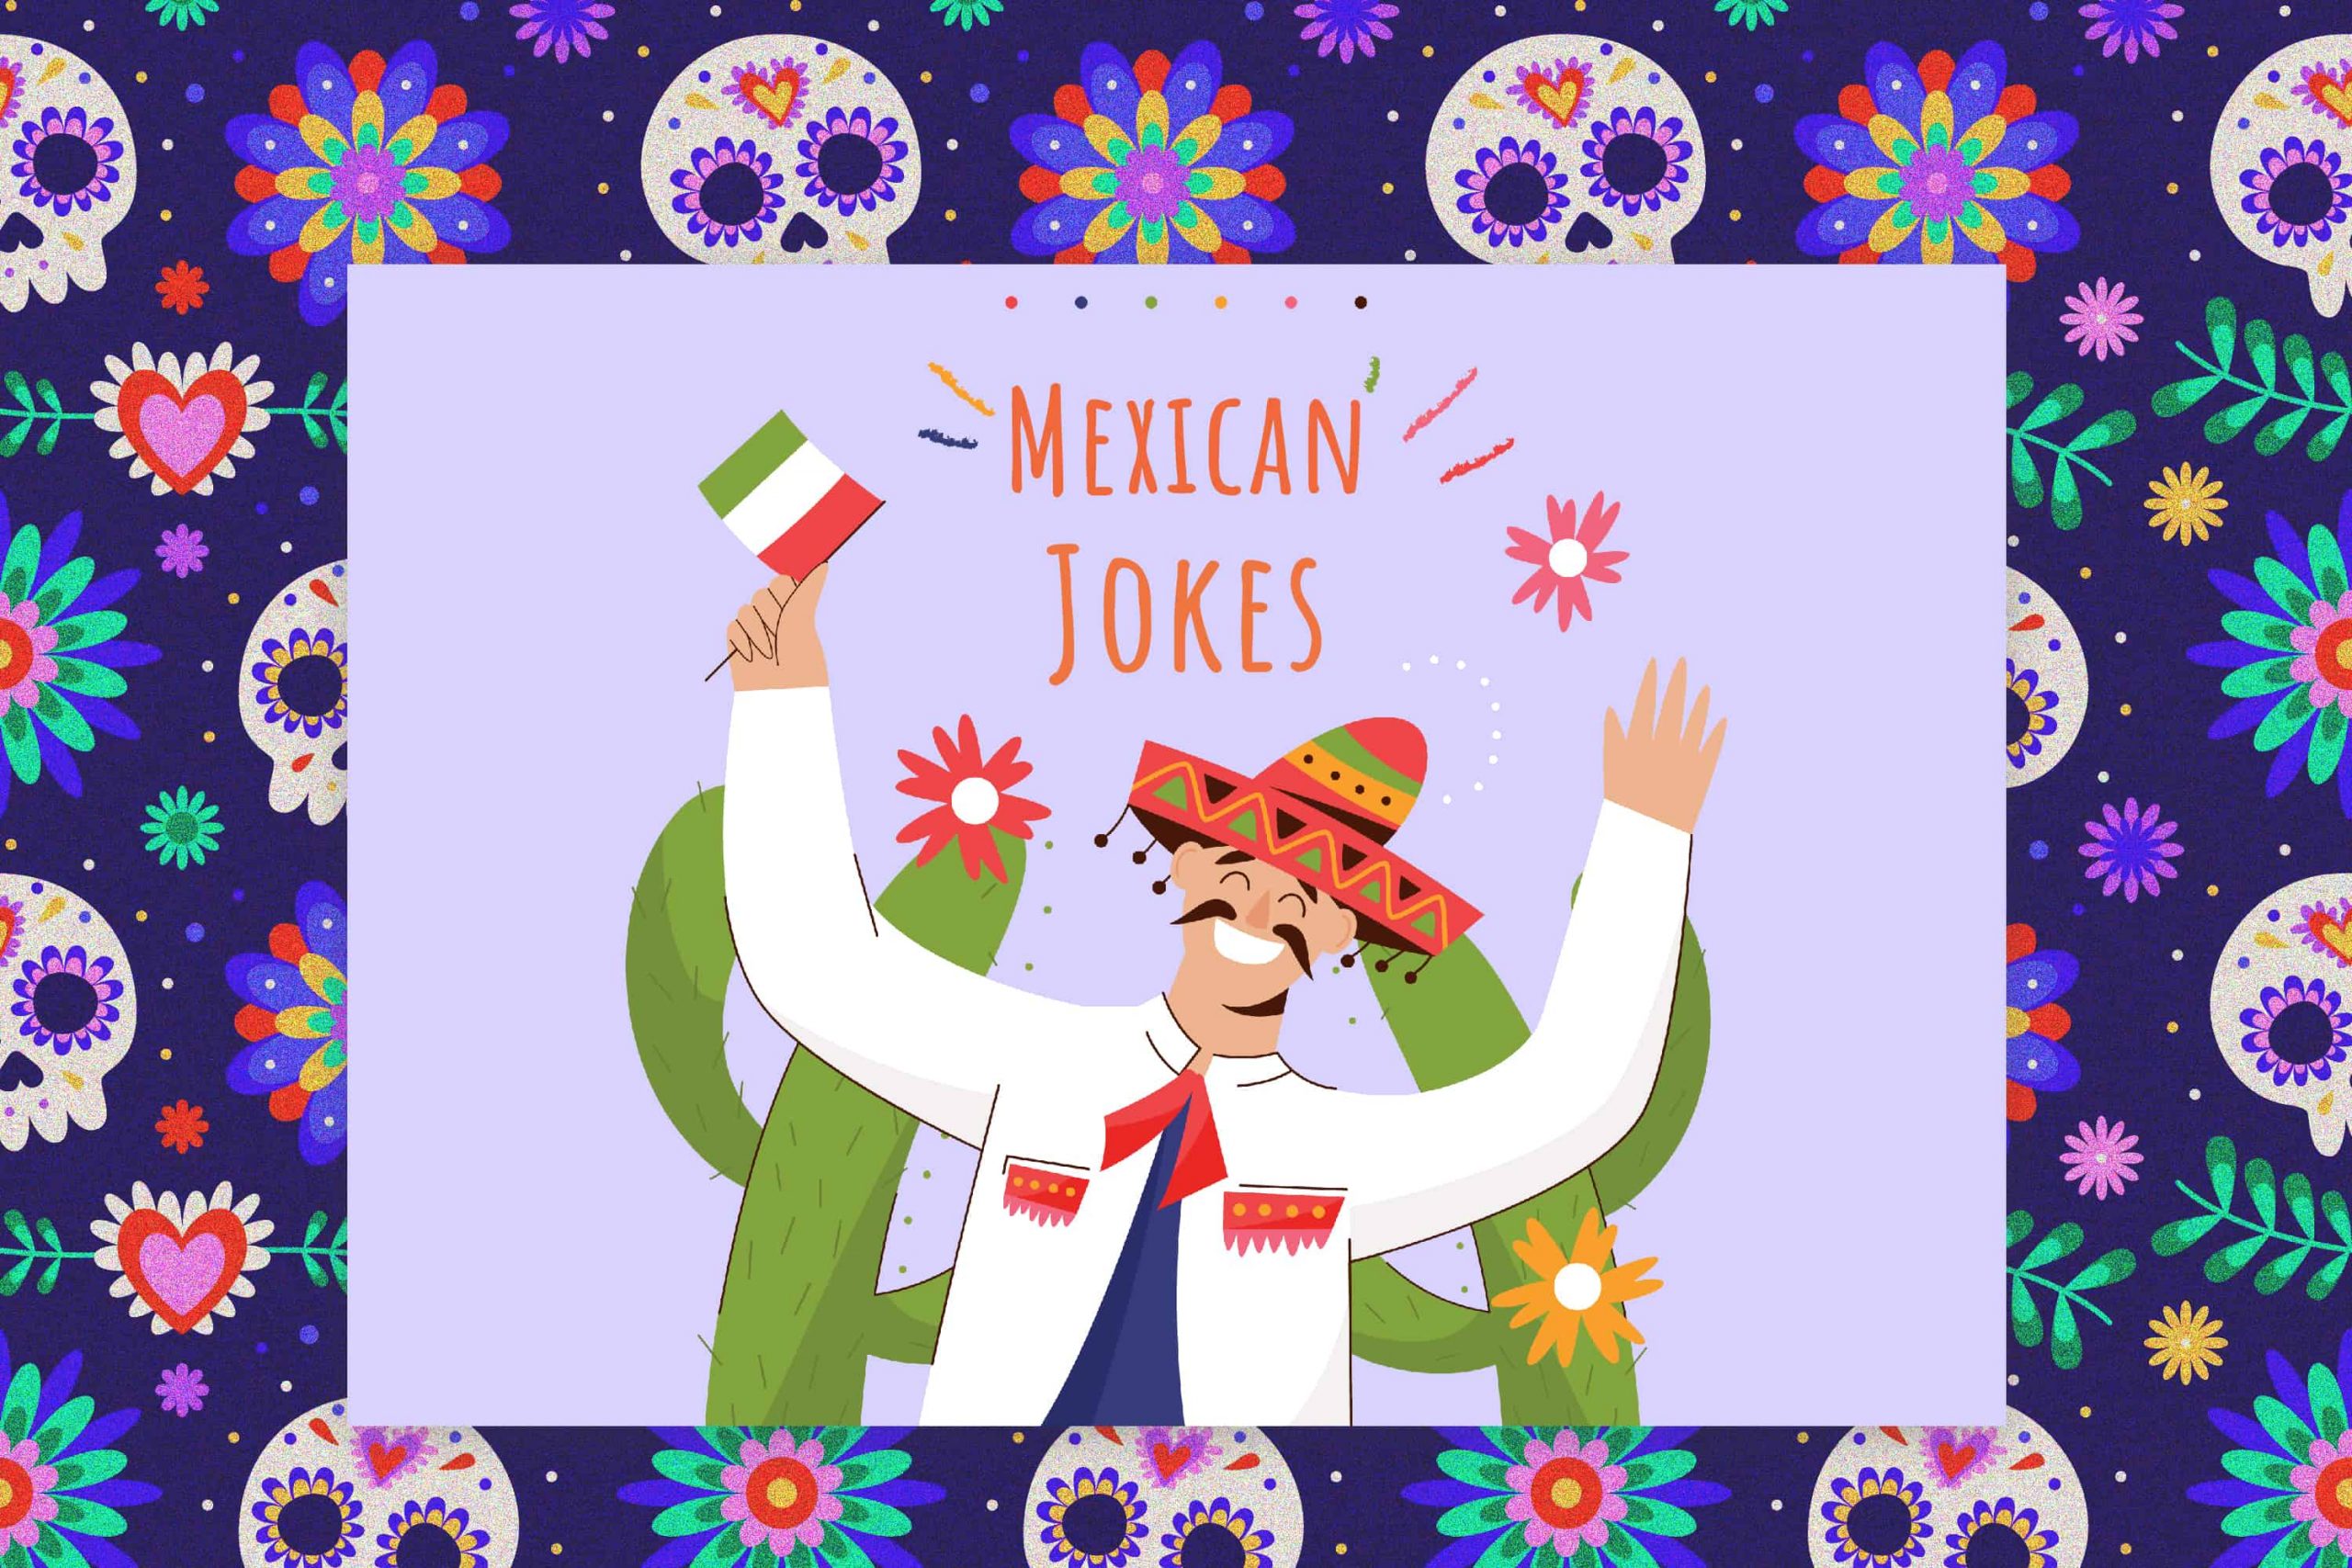 Jokes mexican black and Mexico Jokes